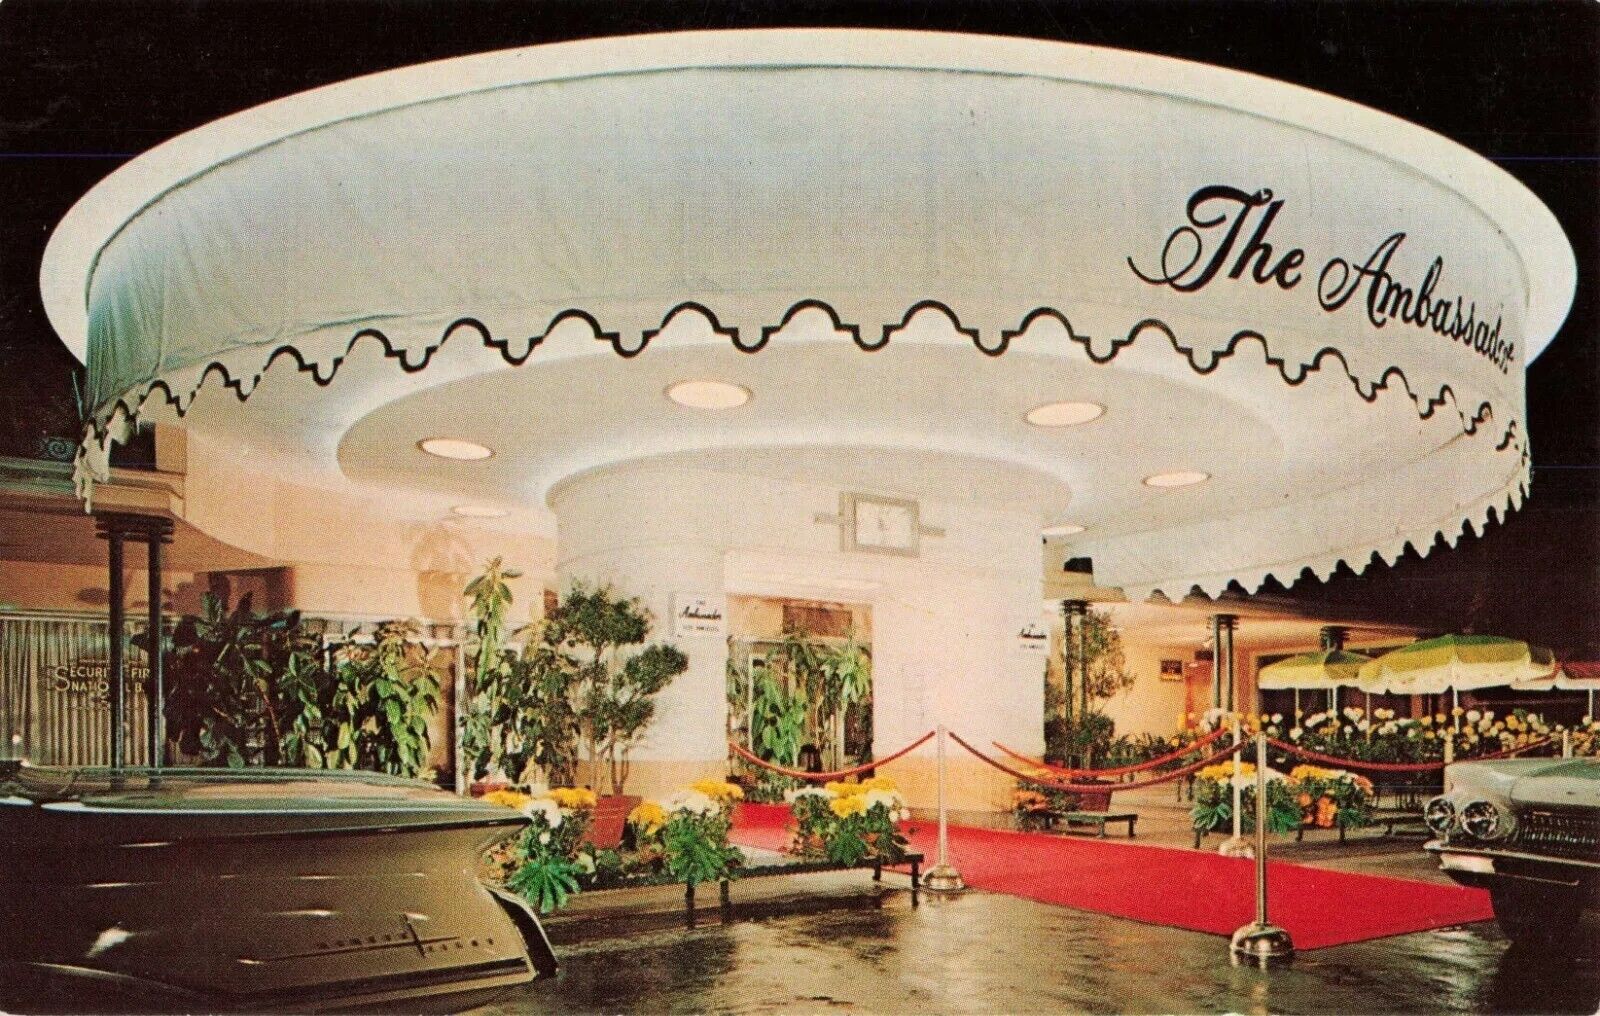 Ambassador Hotel - Los Angeles California CA - Postcard